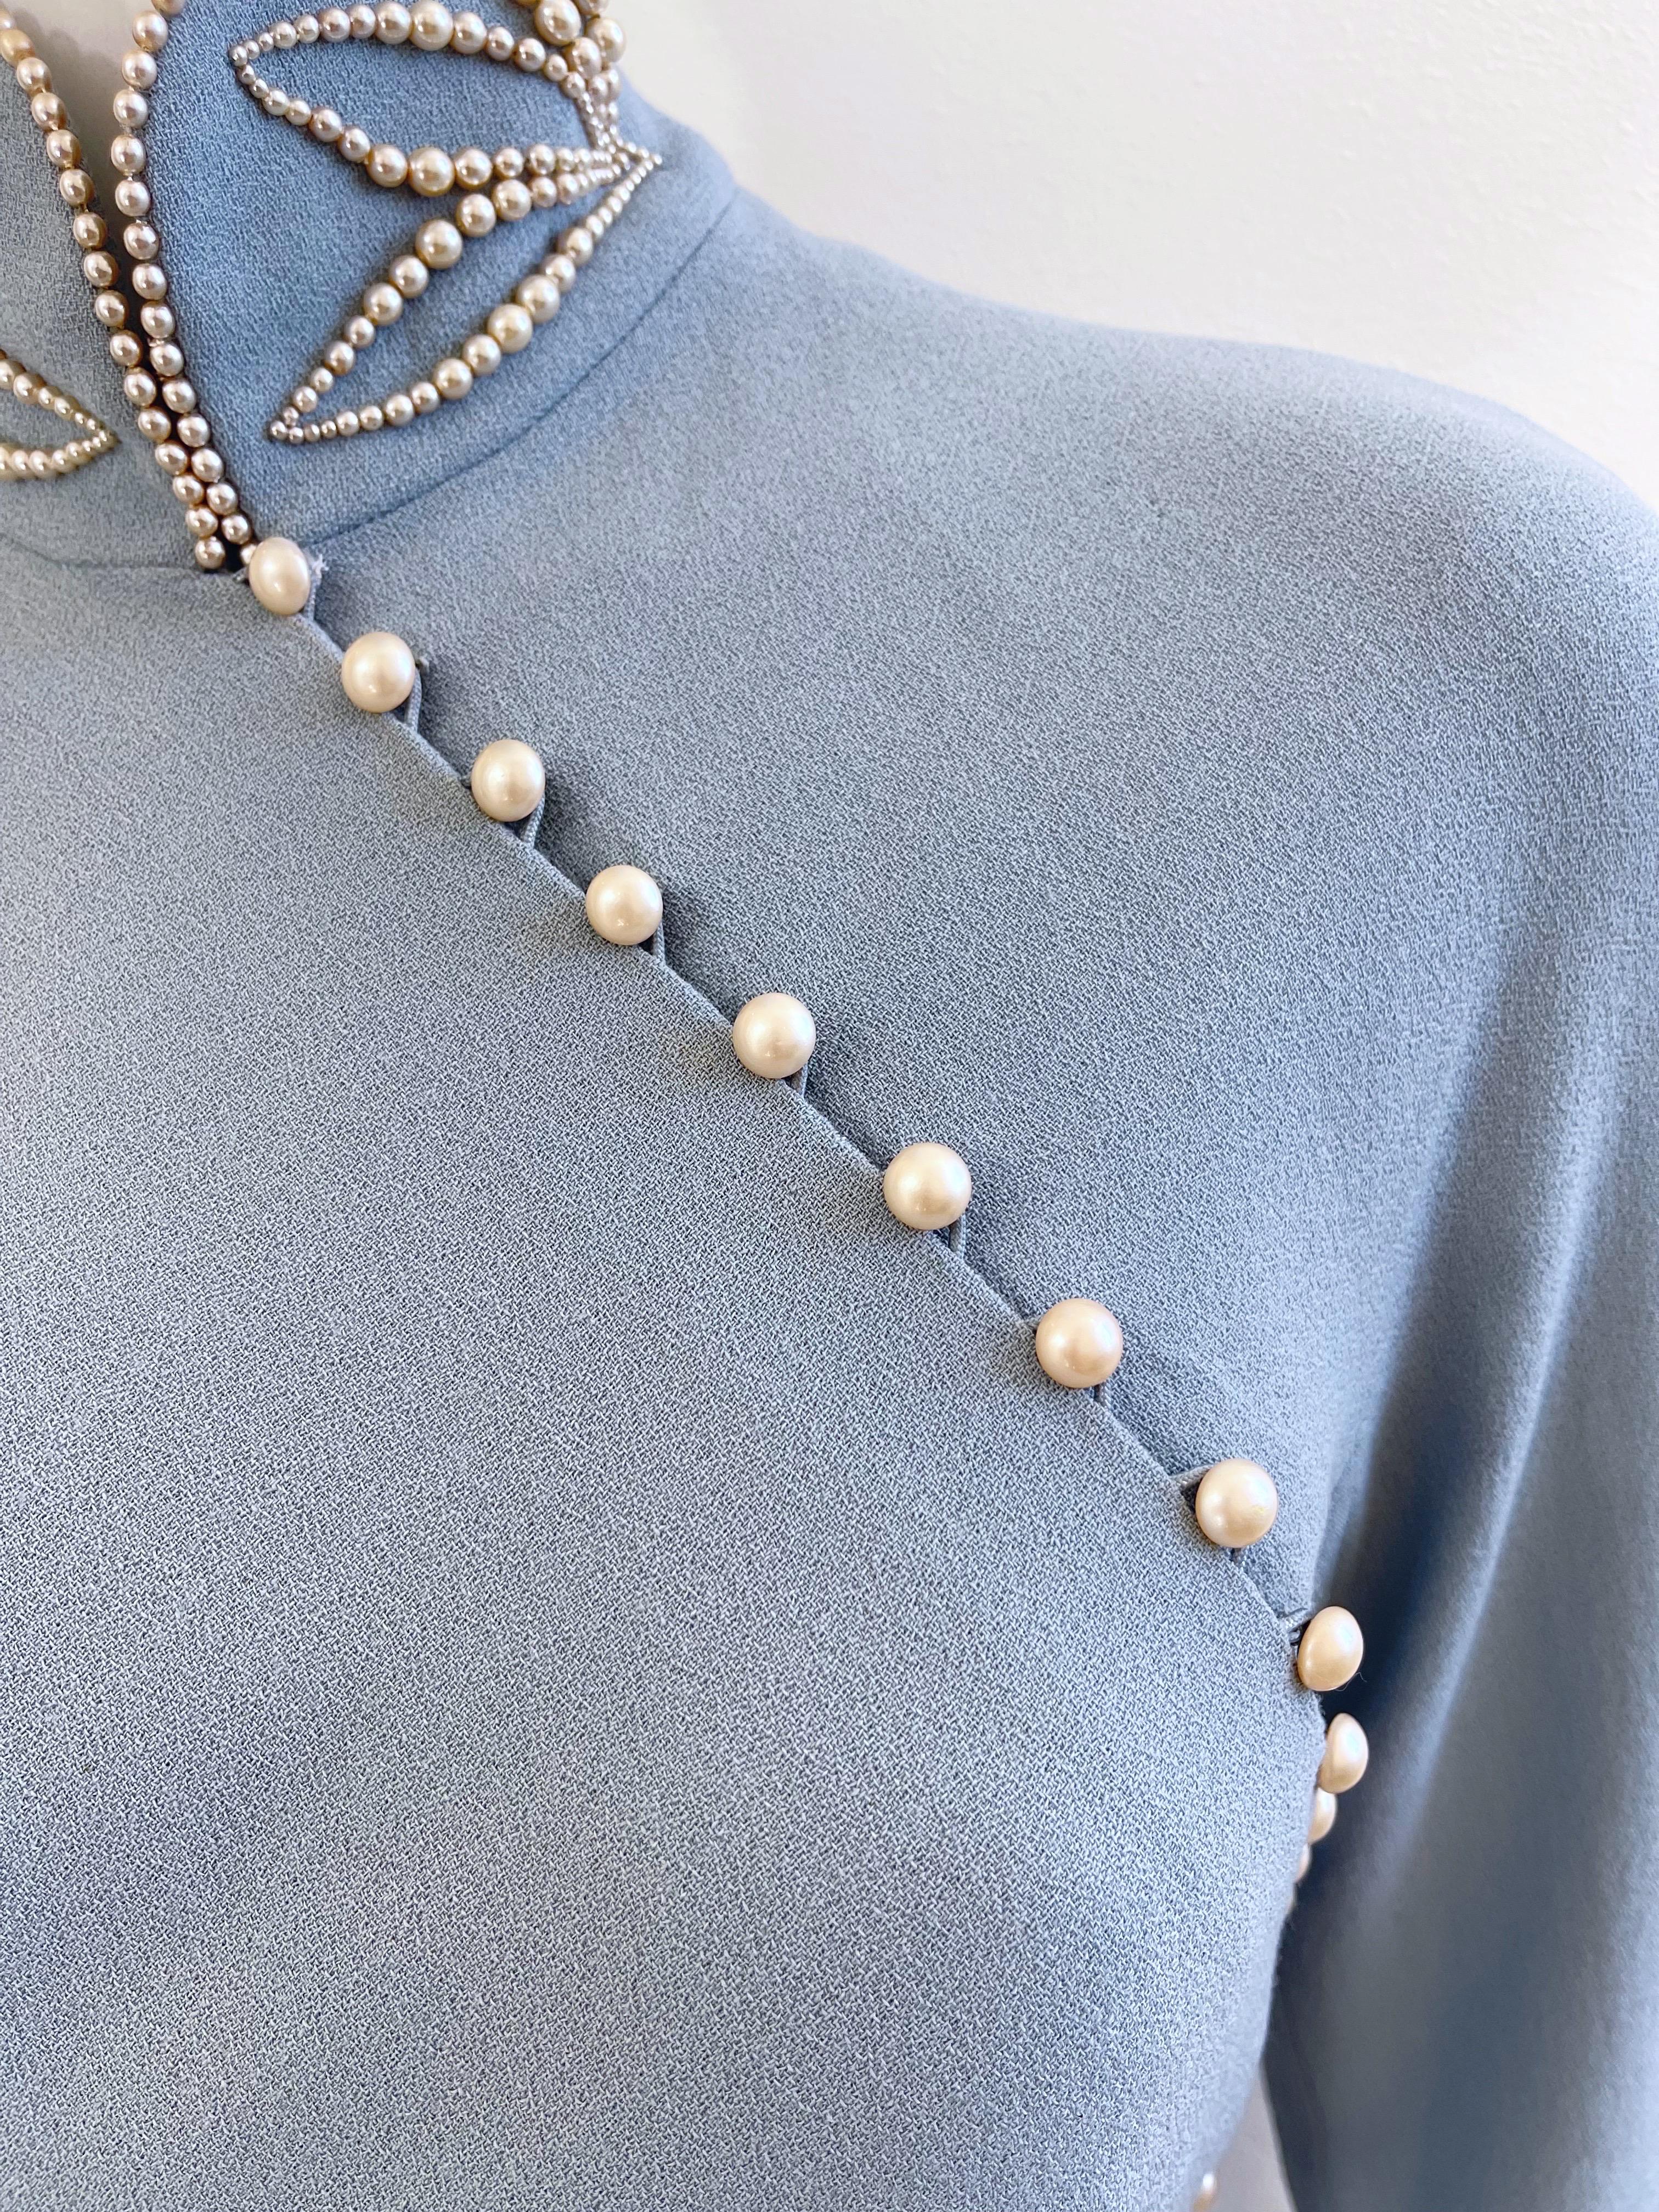 Women's Documented Christian Dior by John Galliano AW 1997 Size 6 Blue Cheongsam Dress